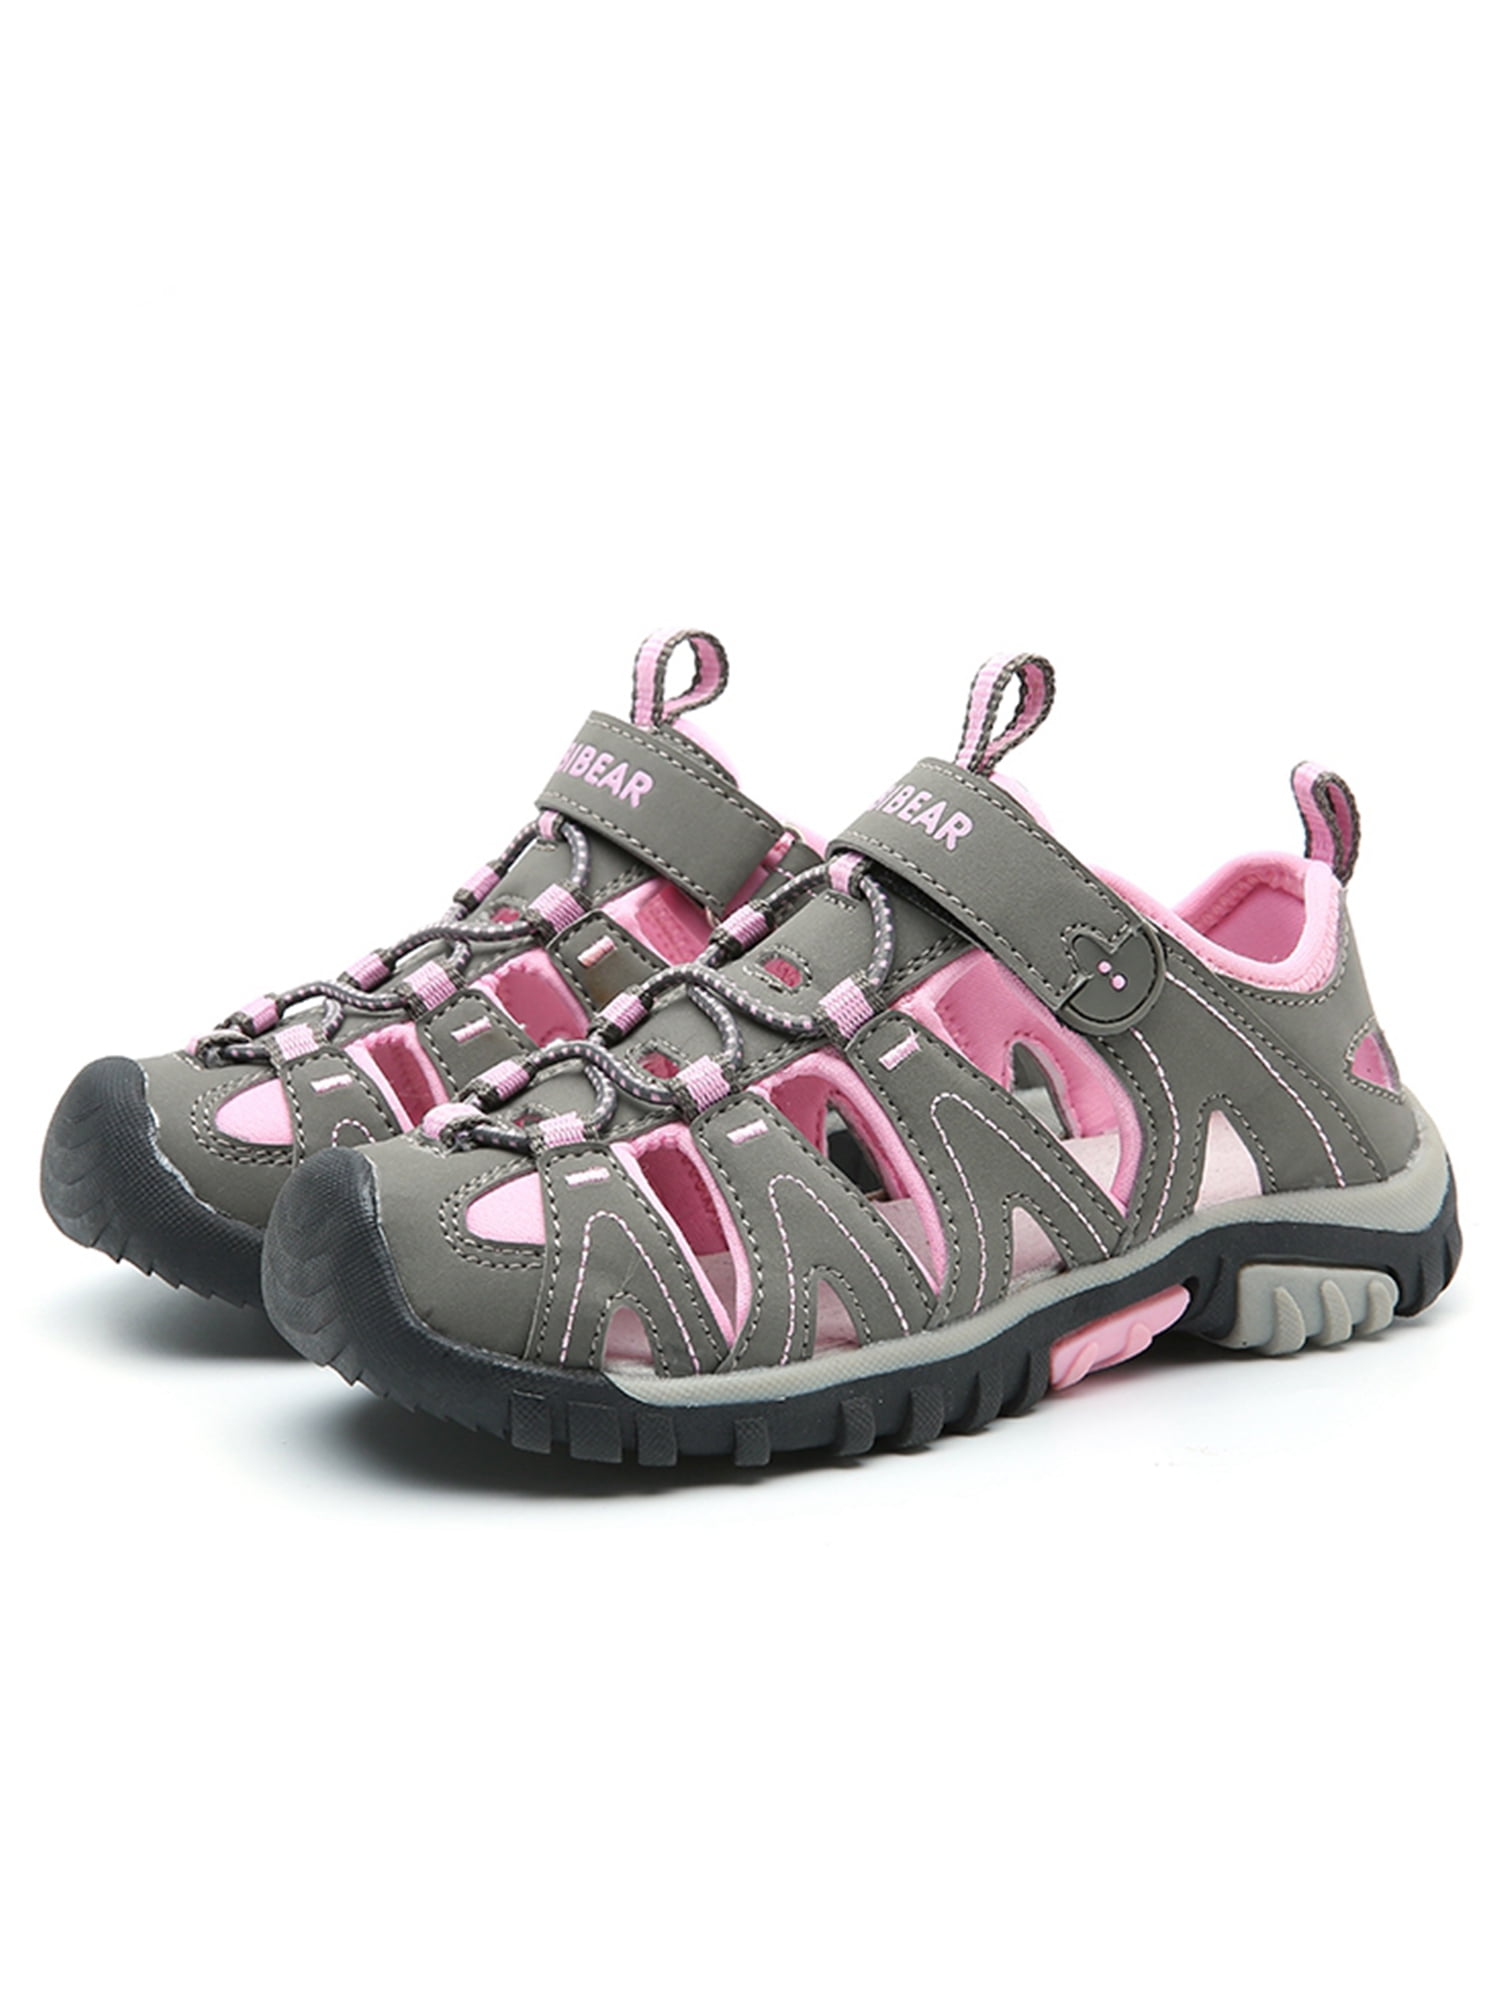 Ladies Shoes Activ Ocean Comfort Sandal Walker Beach Adjustable Closed Toe 5-10